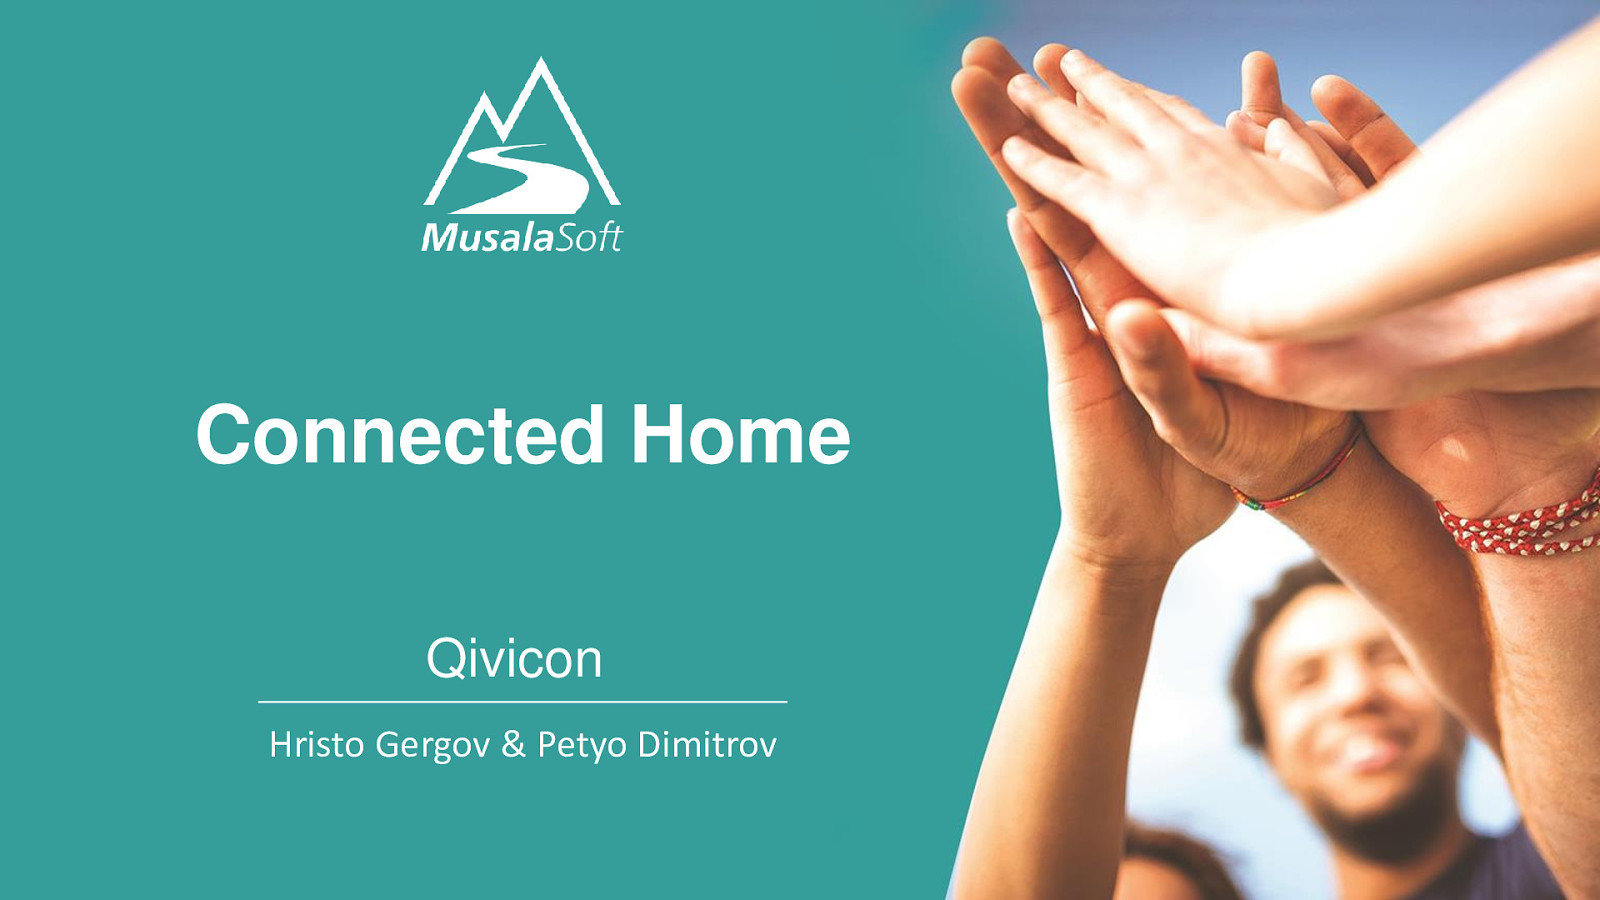 Connected Home - Deutche Telekom’s Qivicon